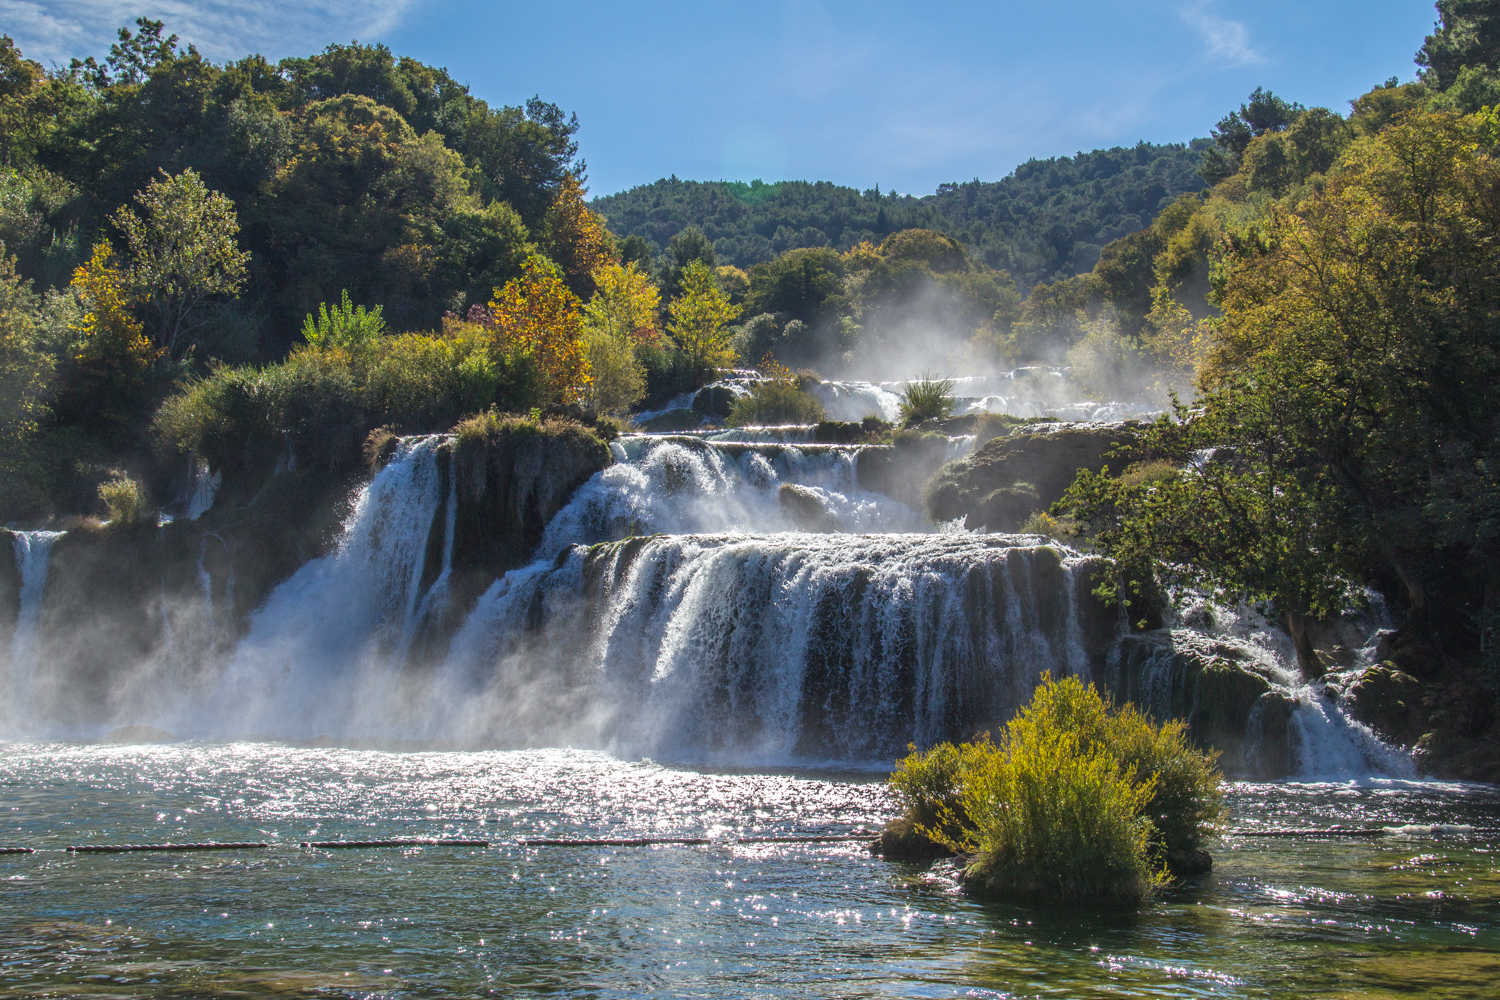 Skradinski buk waterfall in Krka National Park, Croatia  69